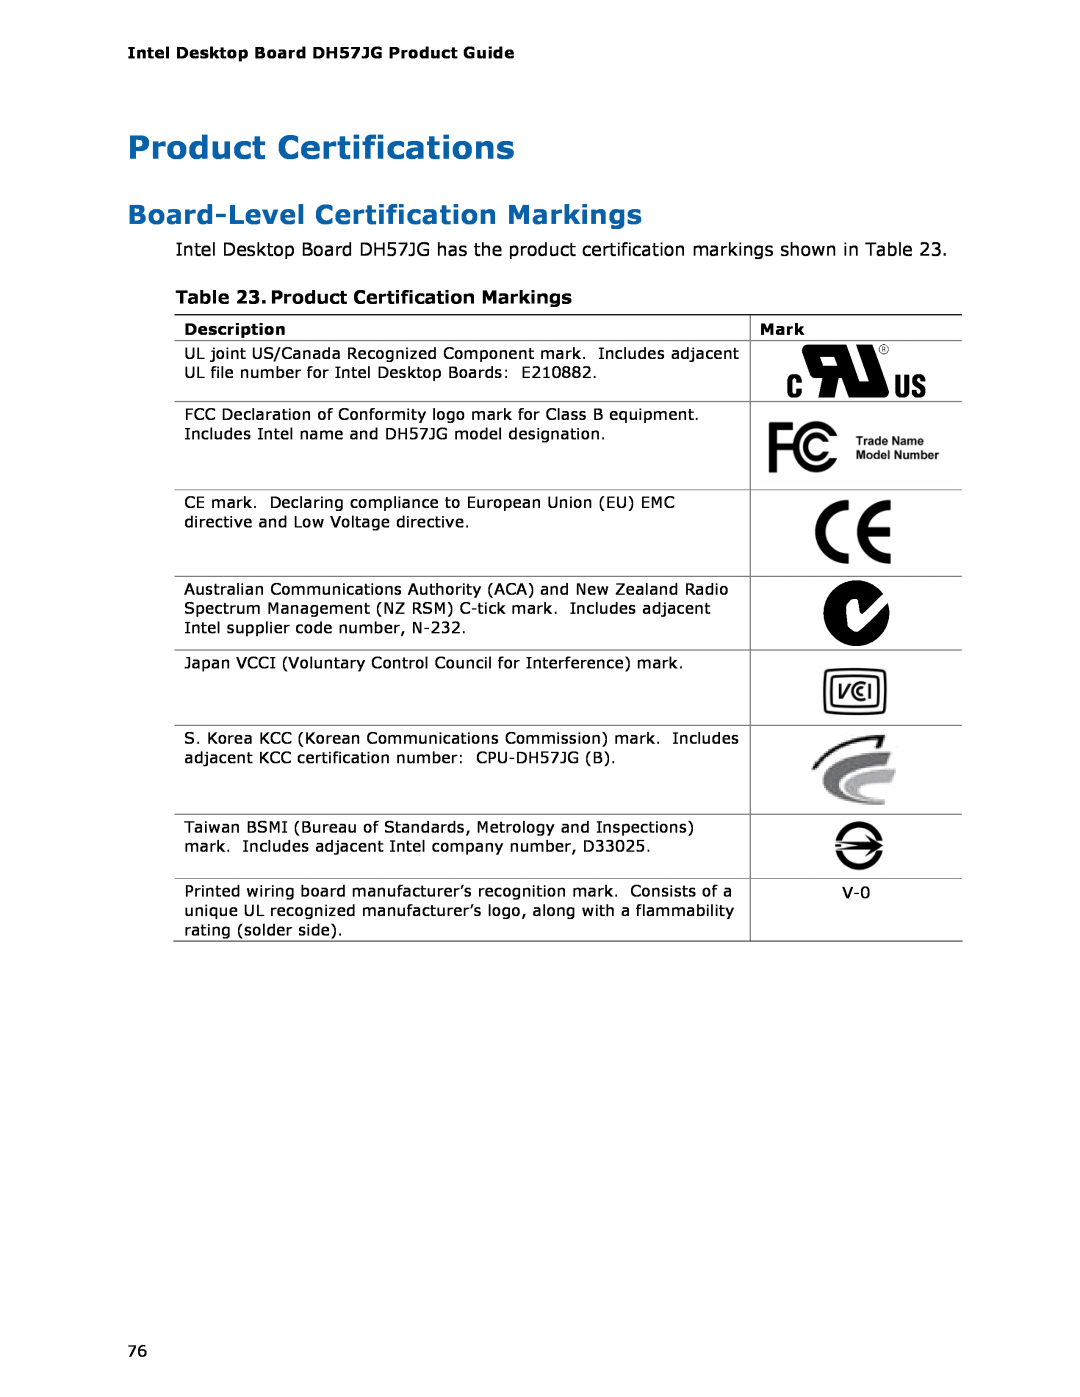 Intel BLKDH57JG Product Certifications, Board-Level Certification Markings, Product Certification Markings, Description 